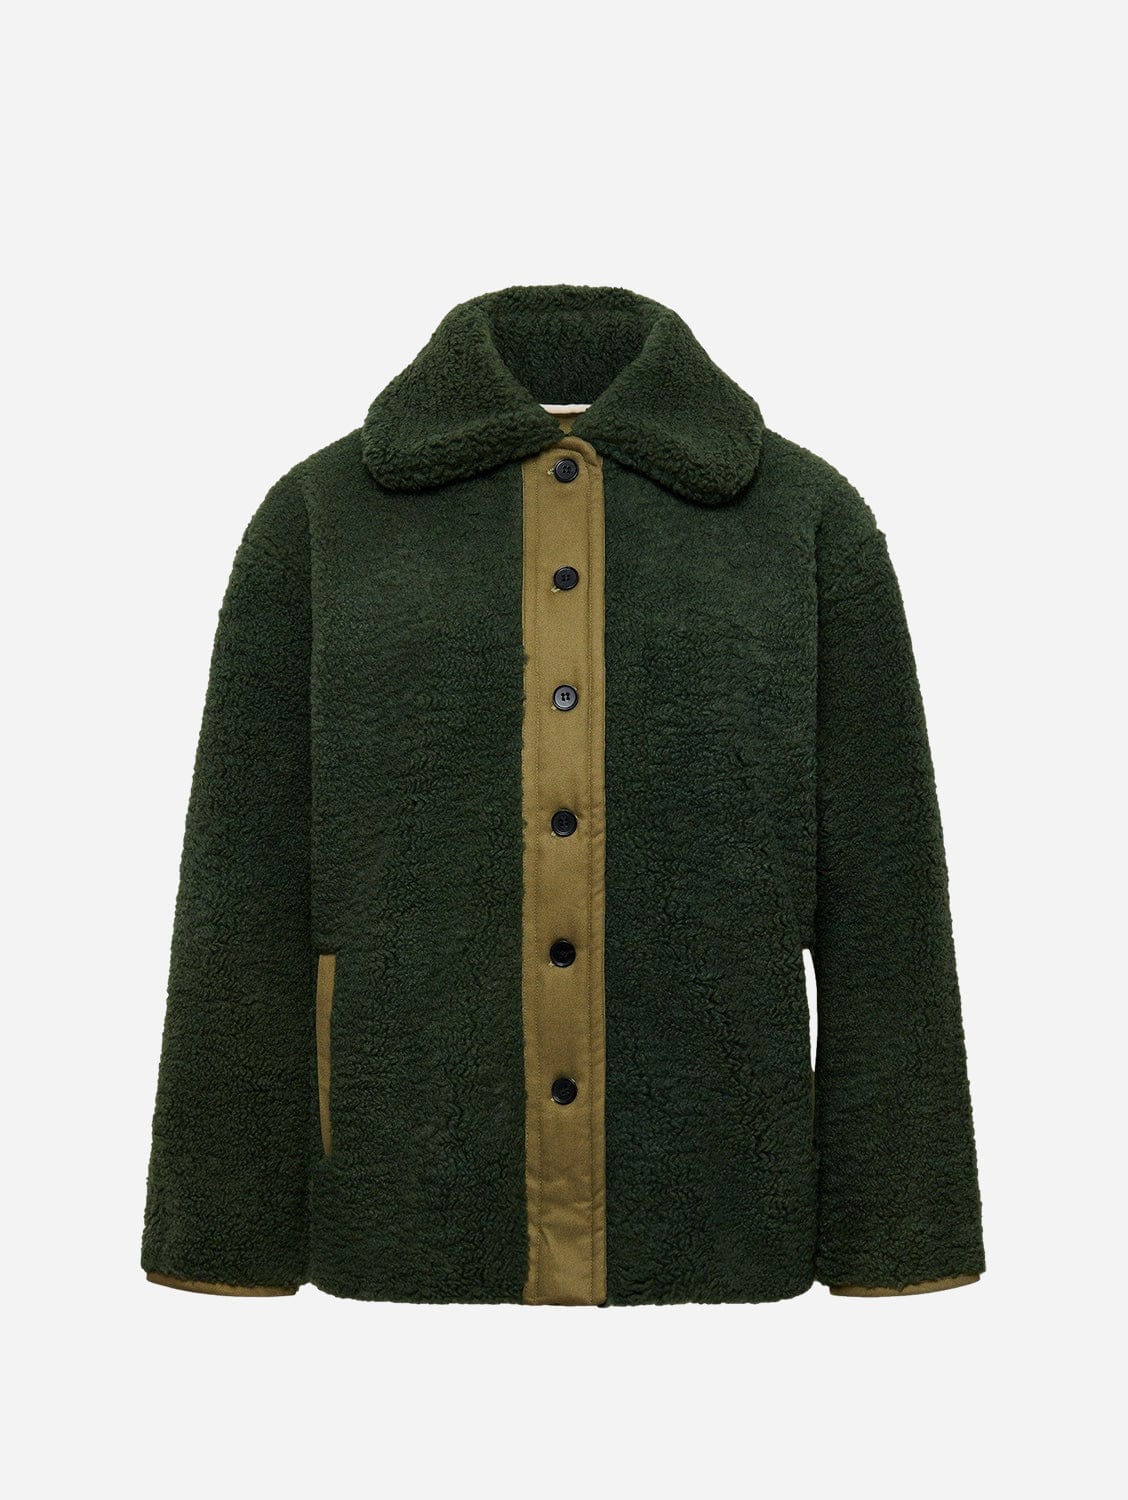 KOMODO Lexi Recycled PET Fleece Coat | Ivy Green UK16 / EU44 / US12